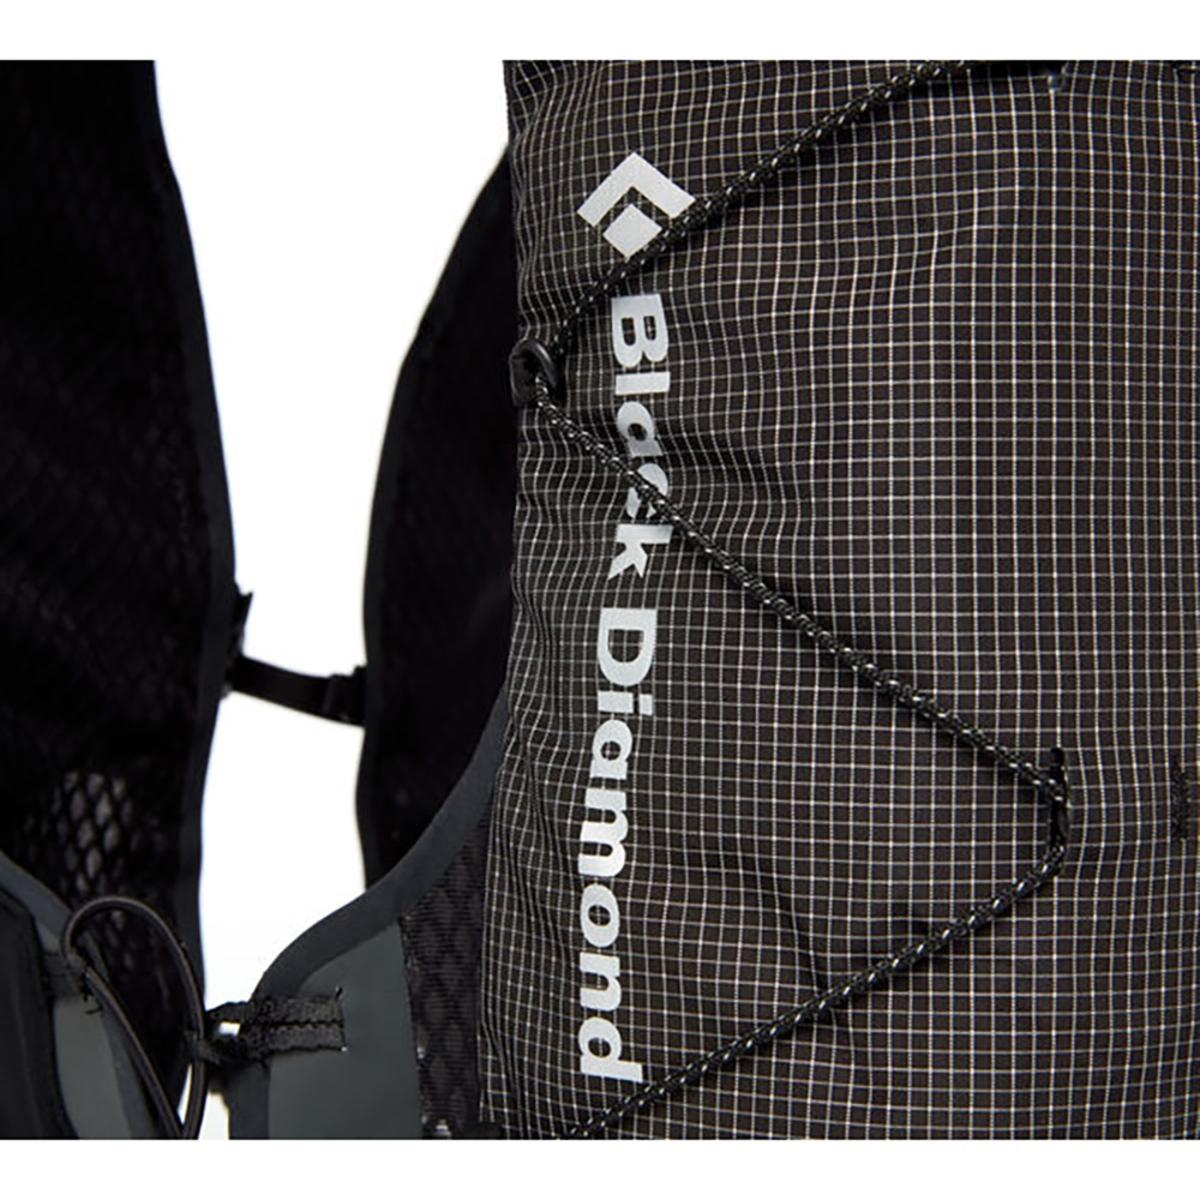 Black Diamond Distance 8L Backpack